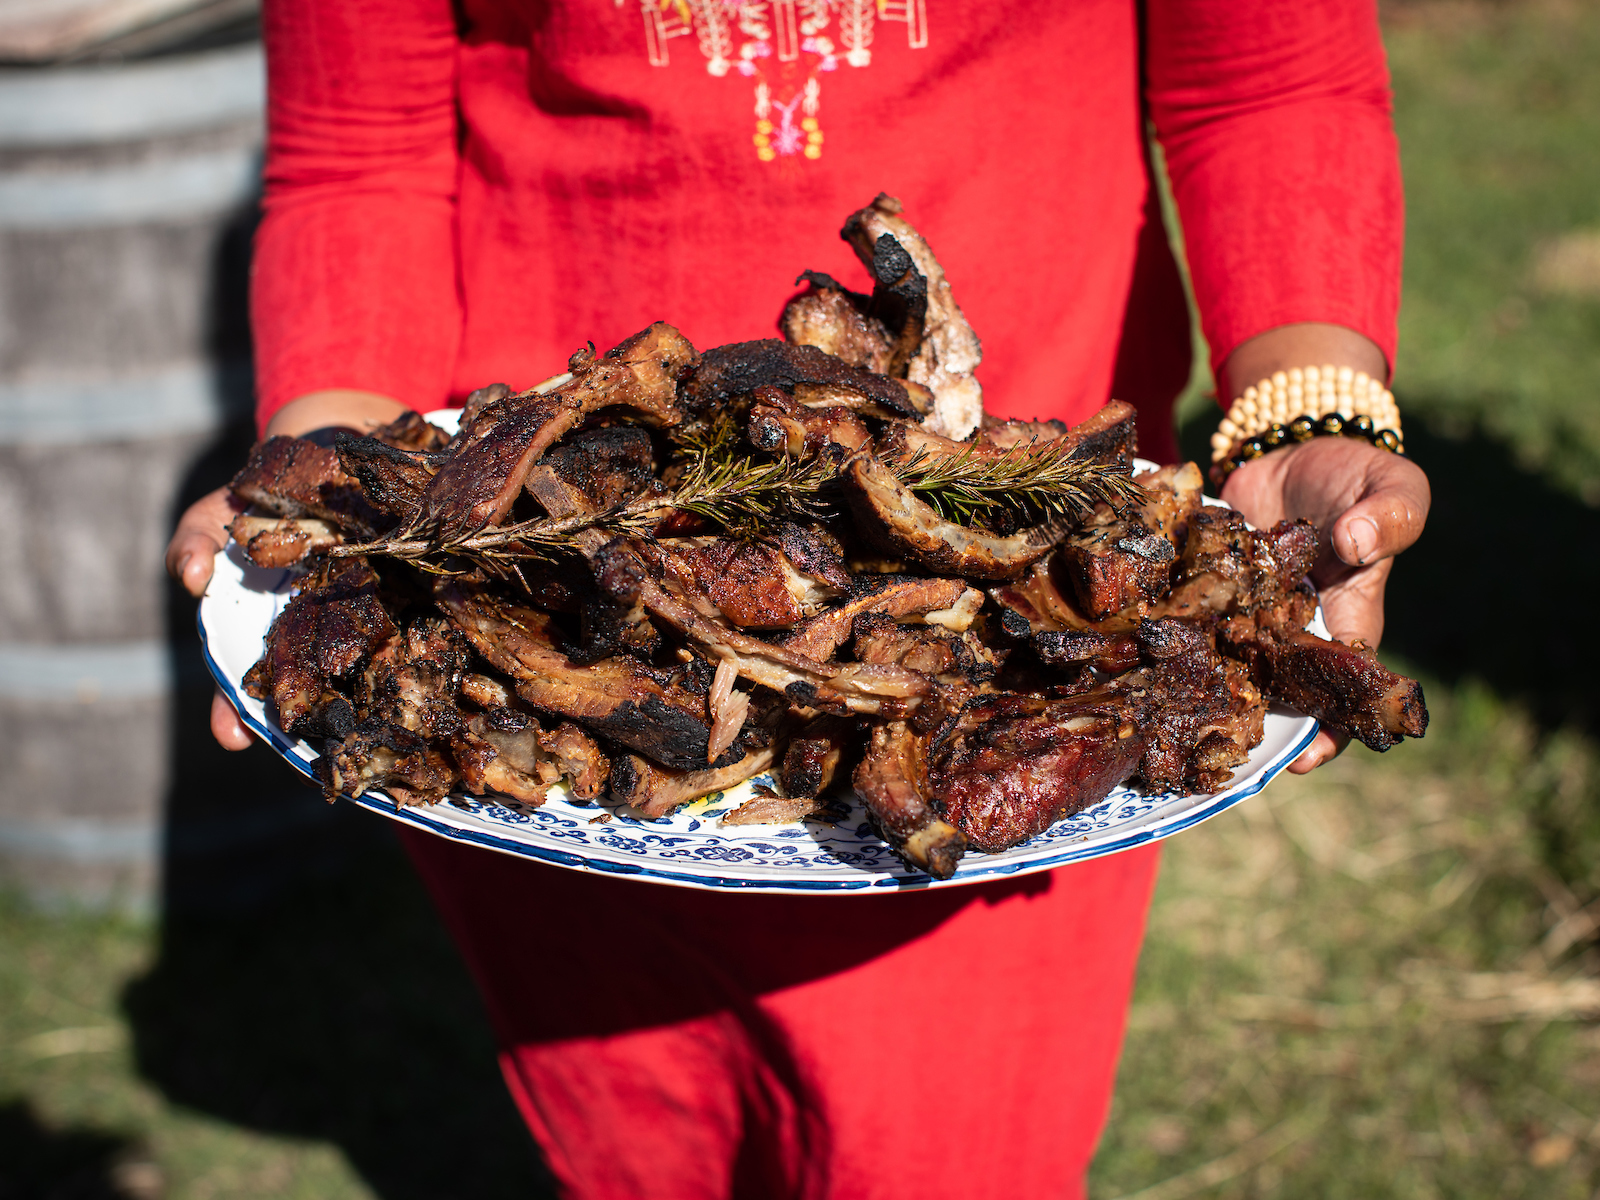 Tia Raiford holding a platter of berbere spiced ribs